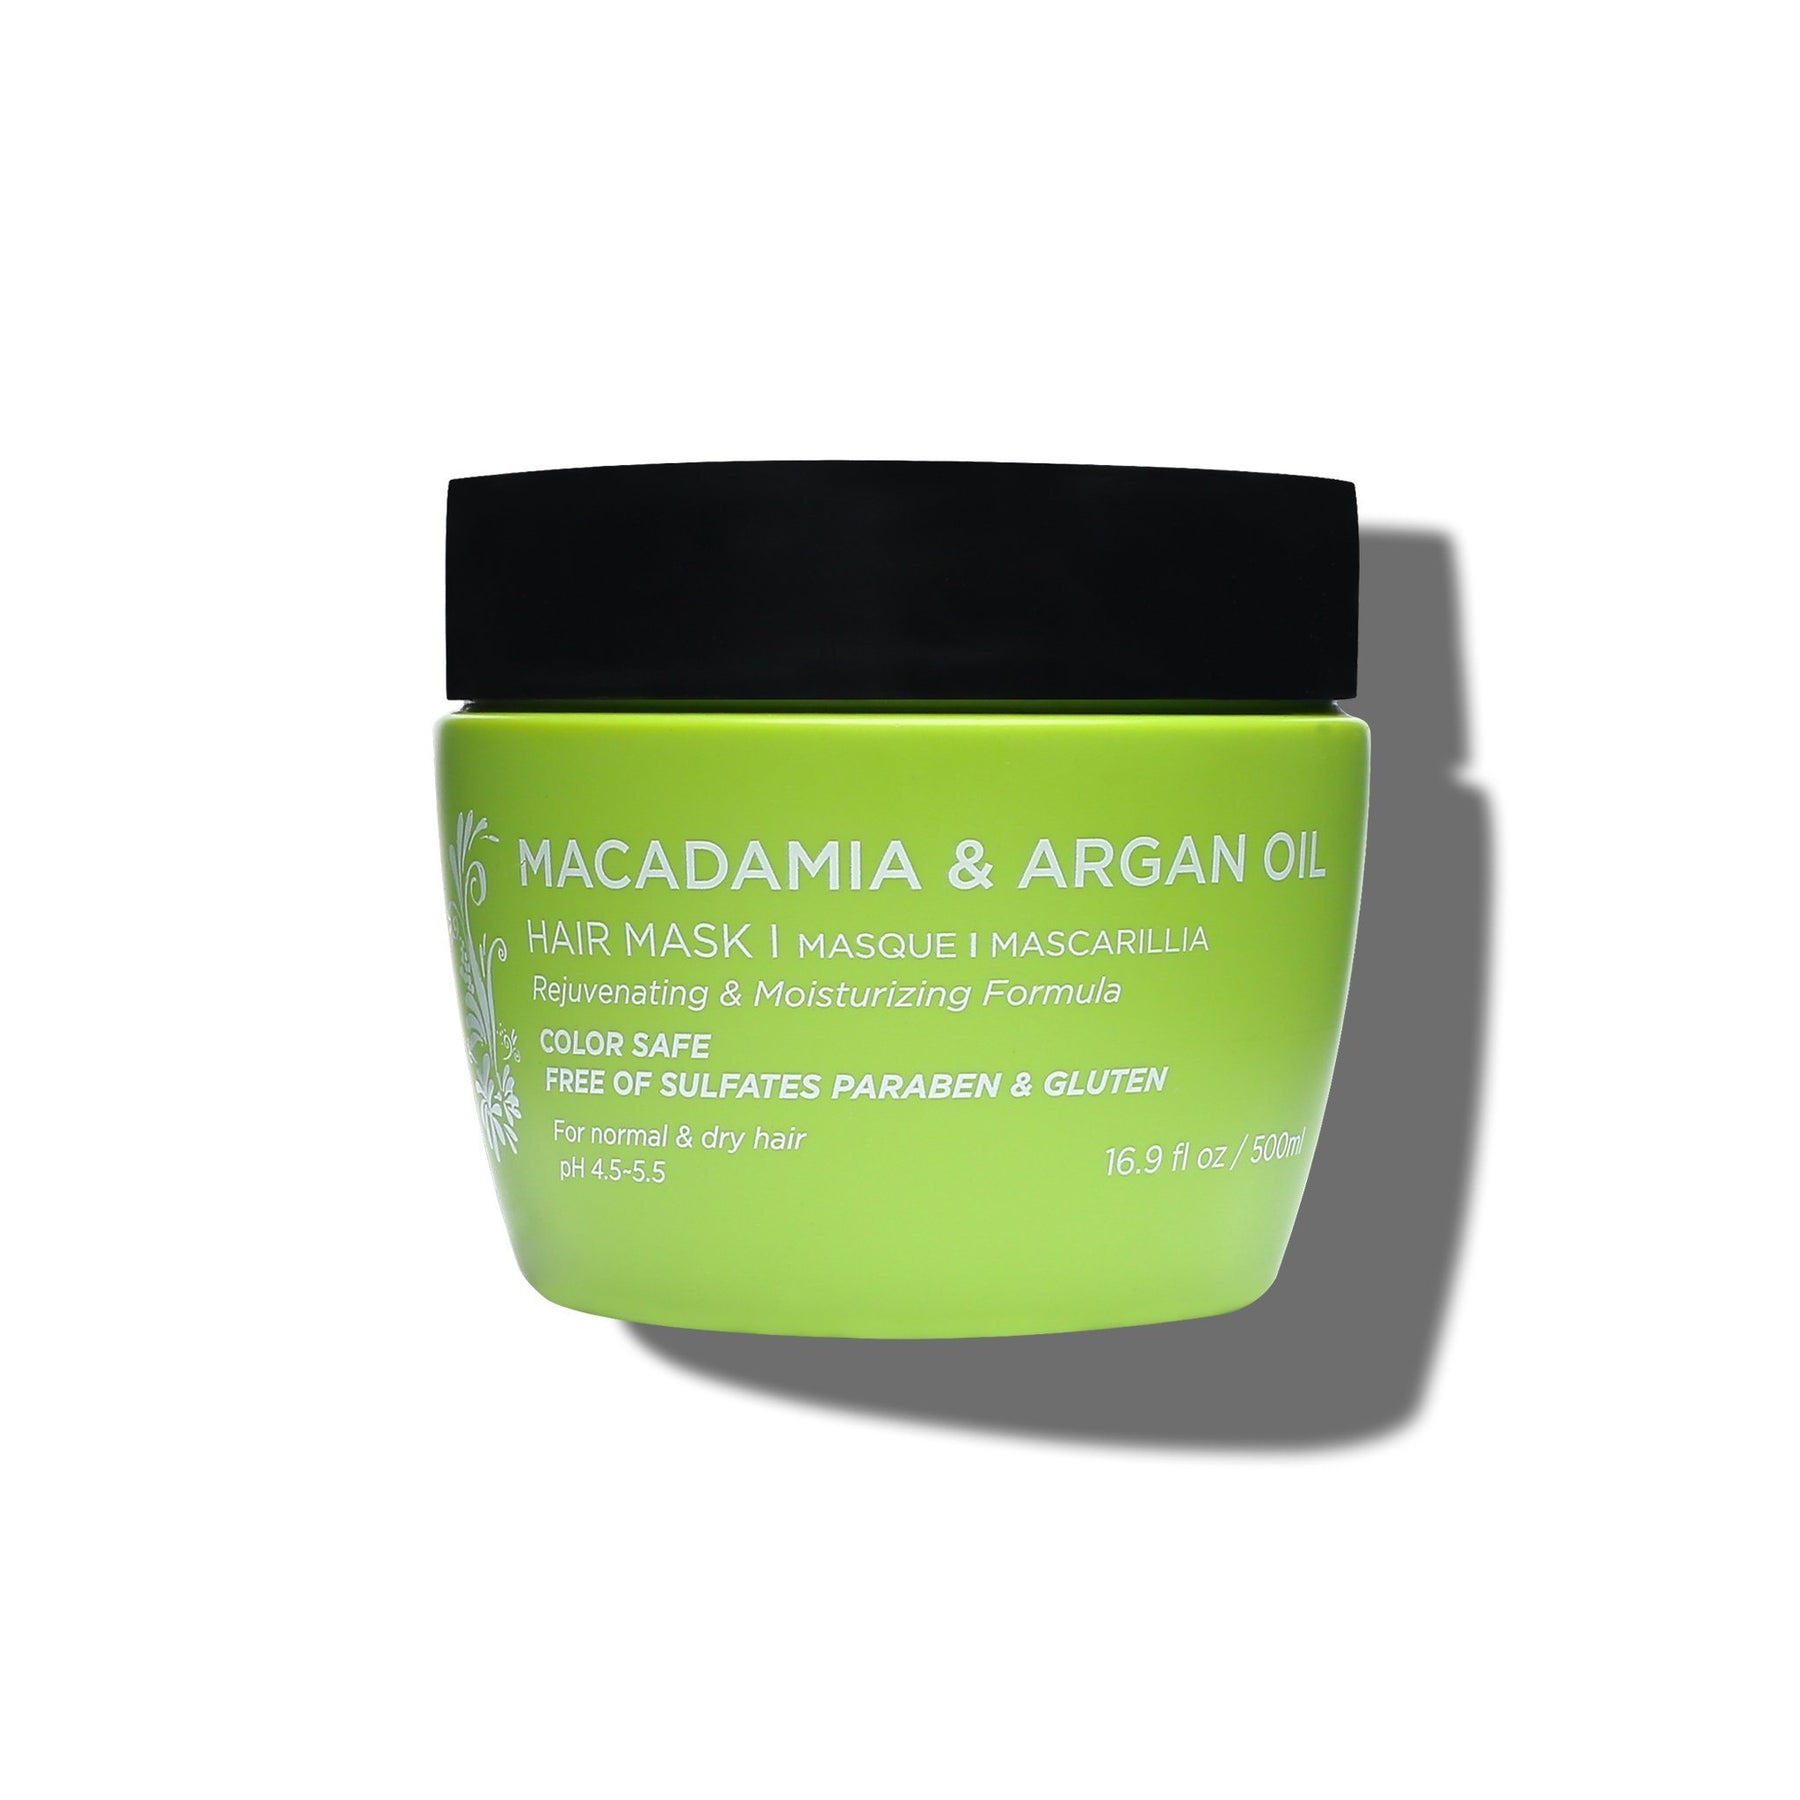 Macadamia & Argan Oil Hair Mask 16.9oz - by Luseta Beauty |ProCare Outlet|